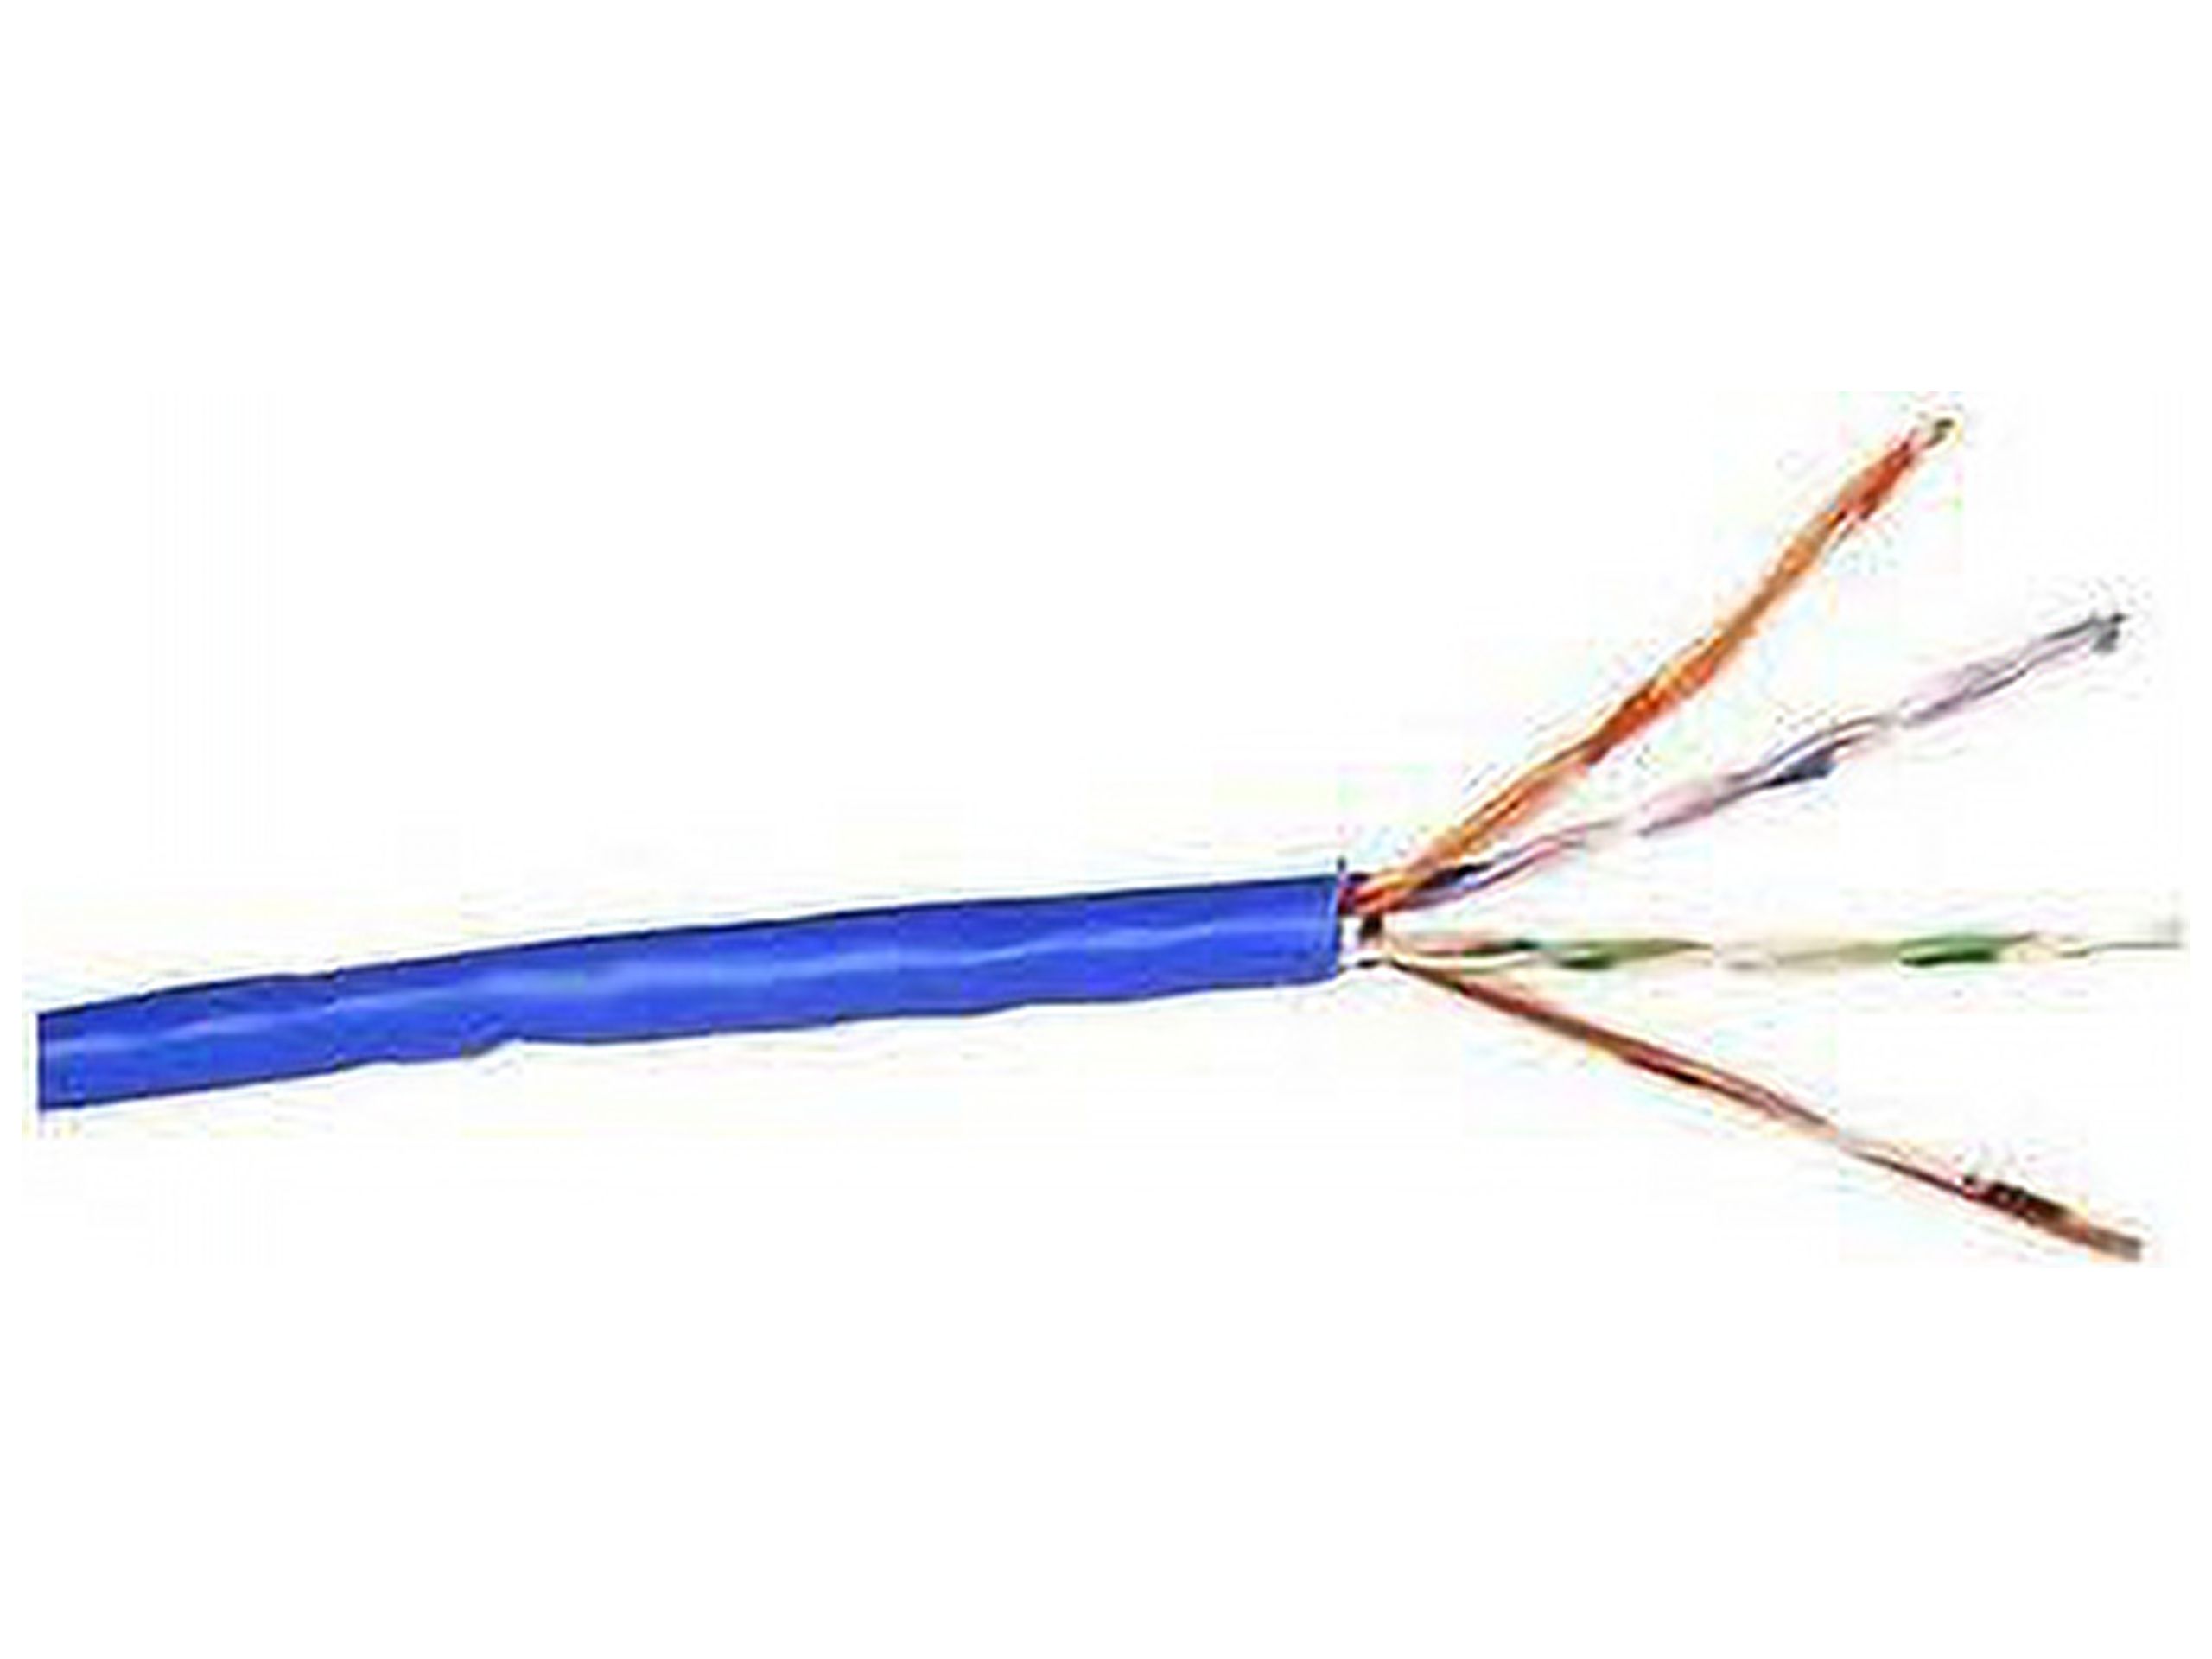 Belkin A7L504-1000-BLU 1000 ft. Cat 5E Blue CAT 5e Horizontal UTP Cable - image 1 of 2